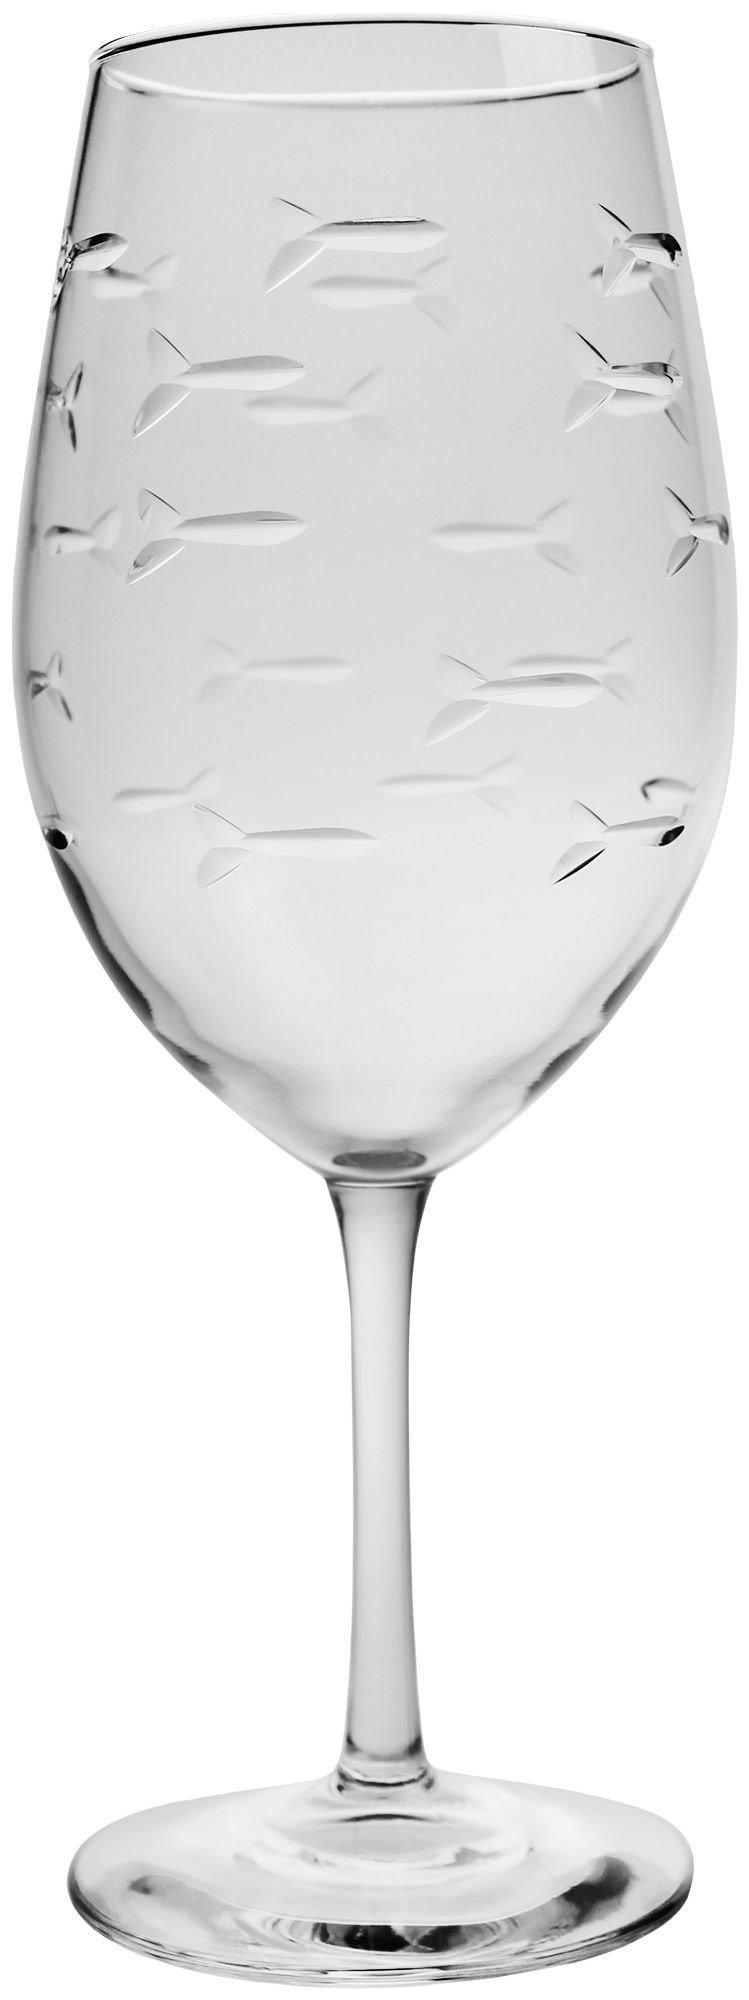 Rolf Glass 18 oz. School of Fish Wine Glass